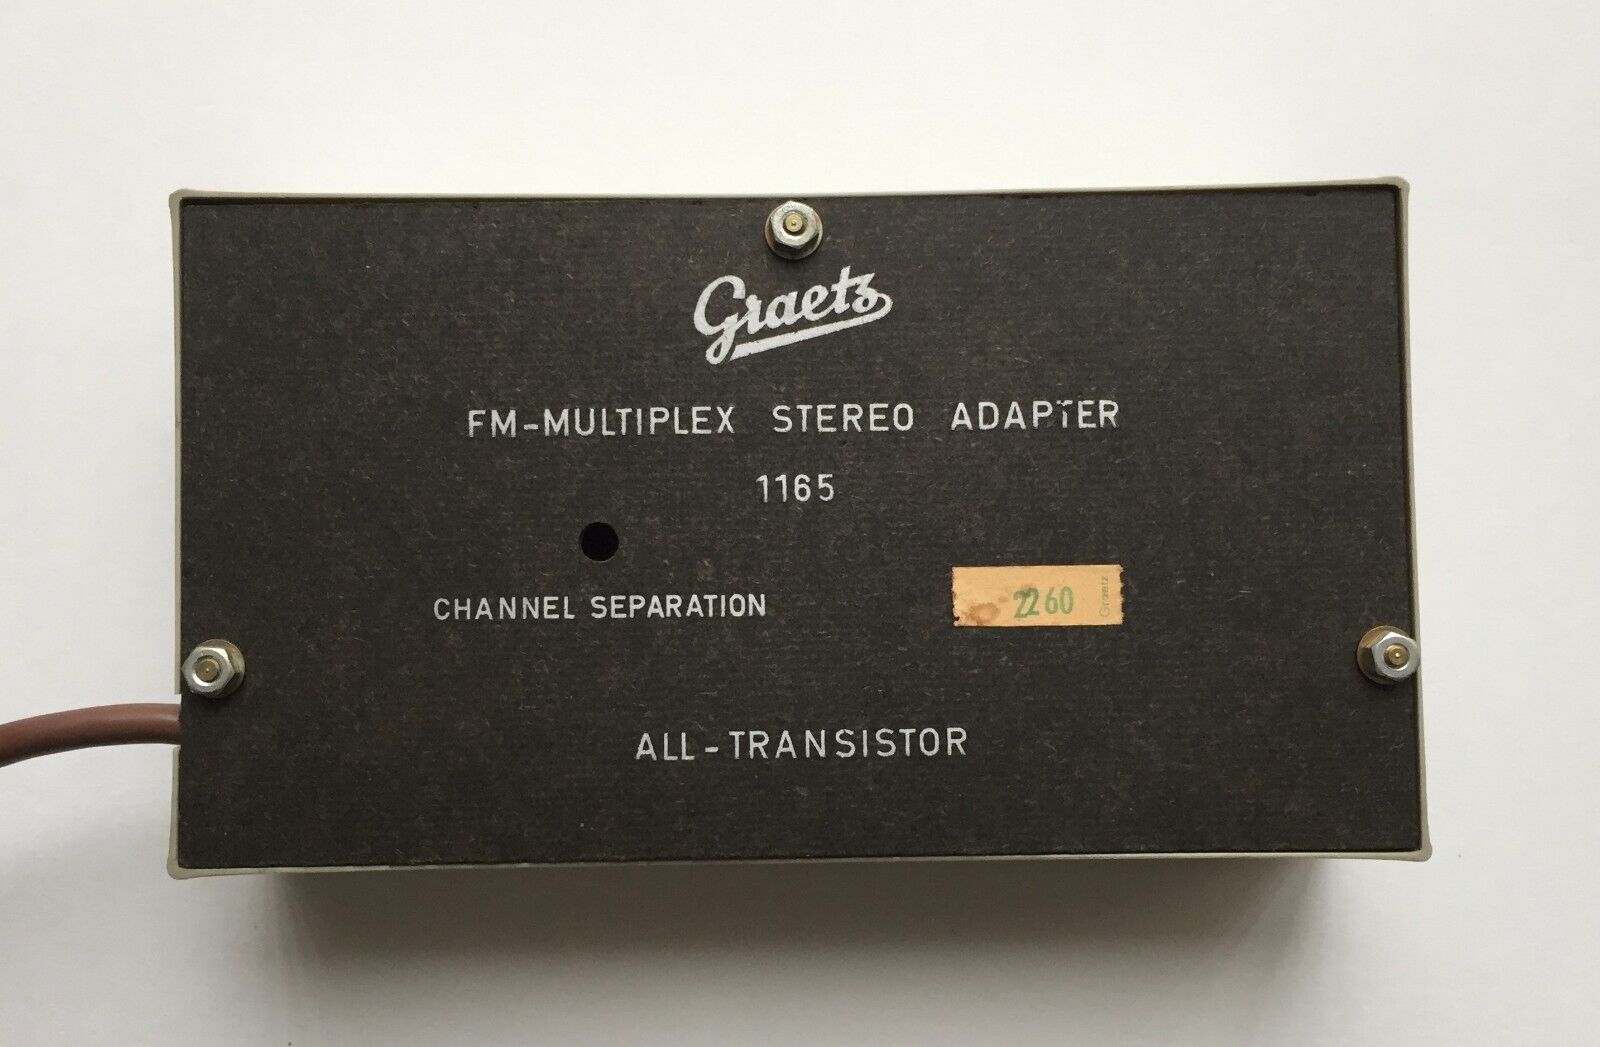 Vintage Graetz FM-Multiplex Stereo Adapter 1165 (Untested)